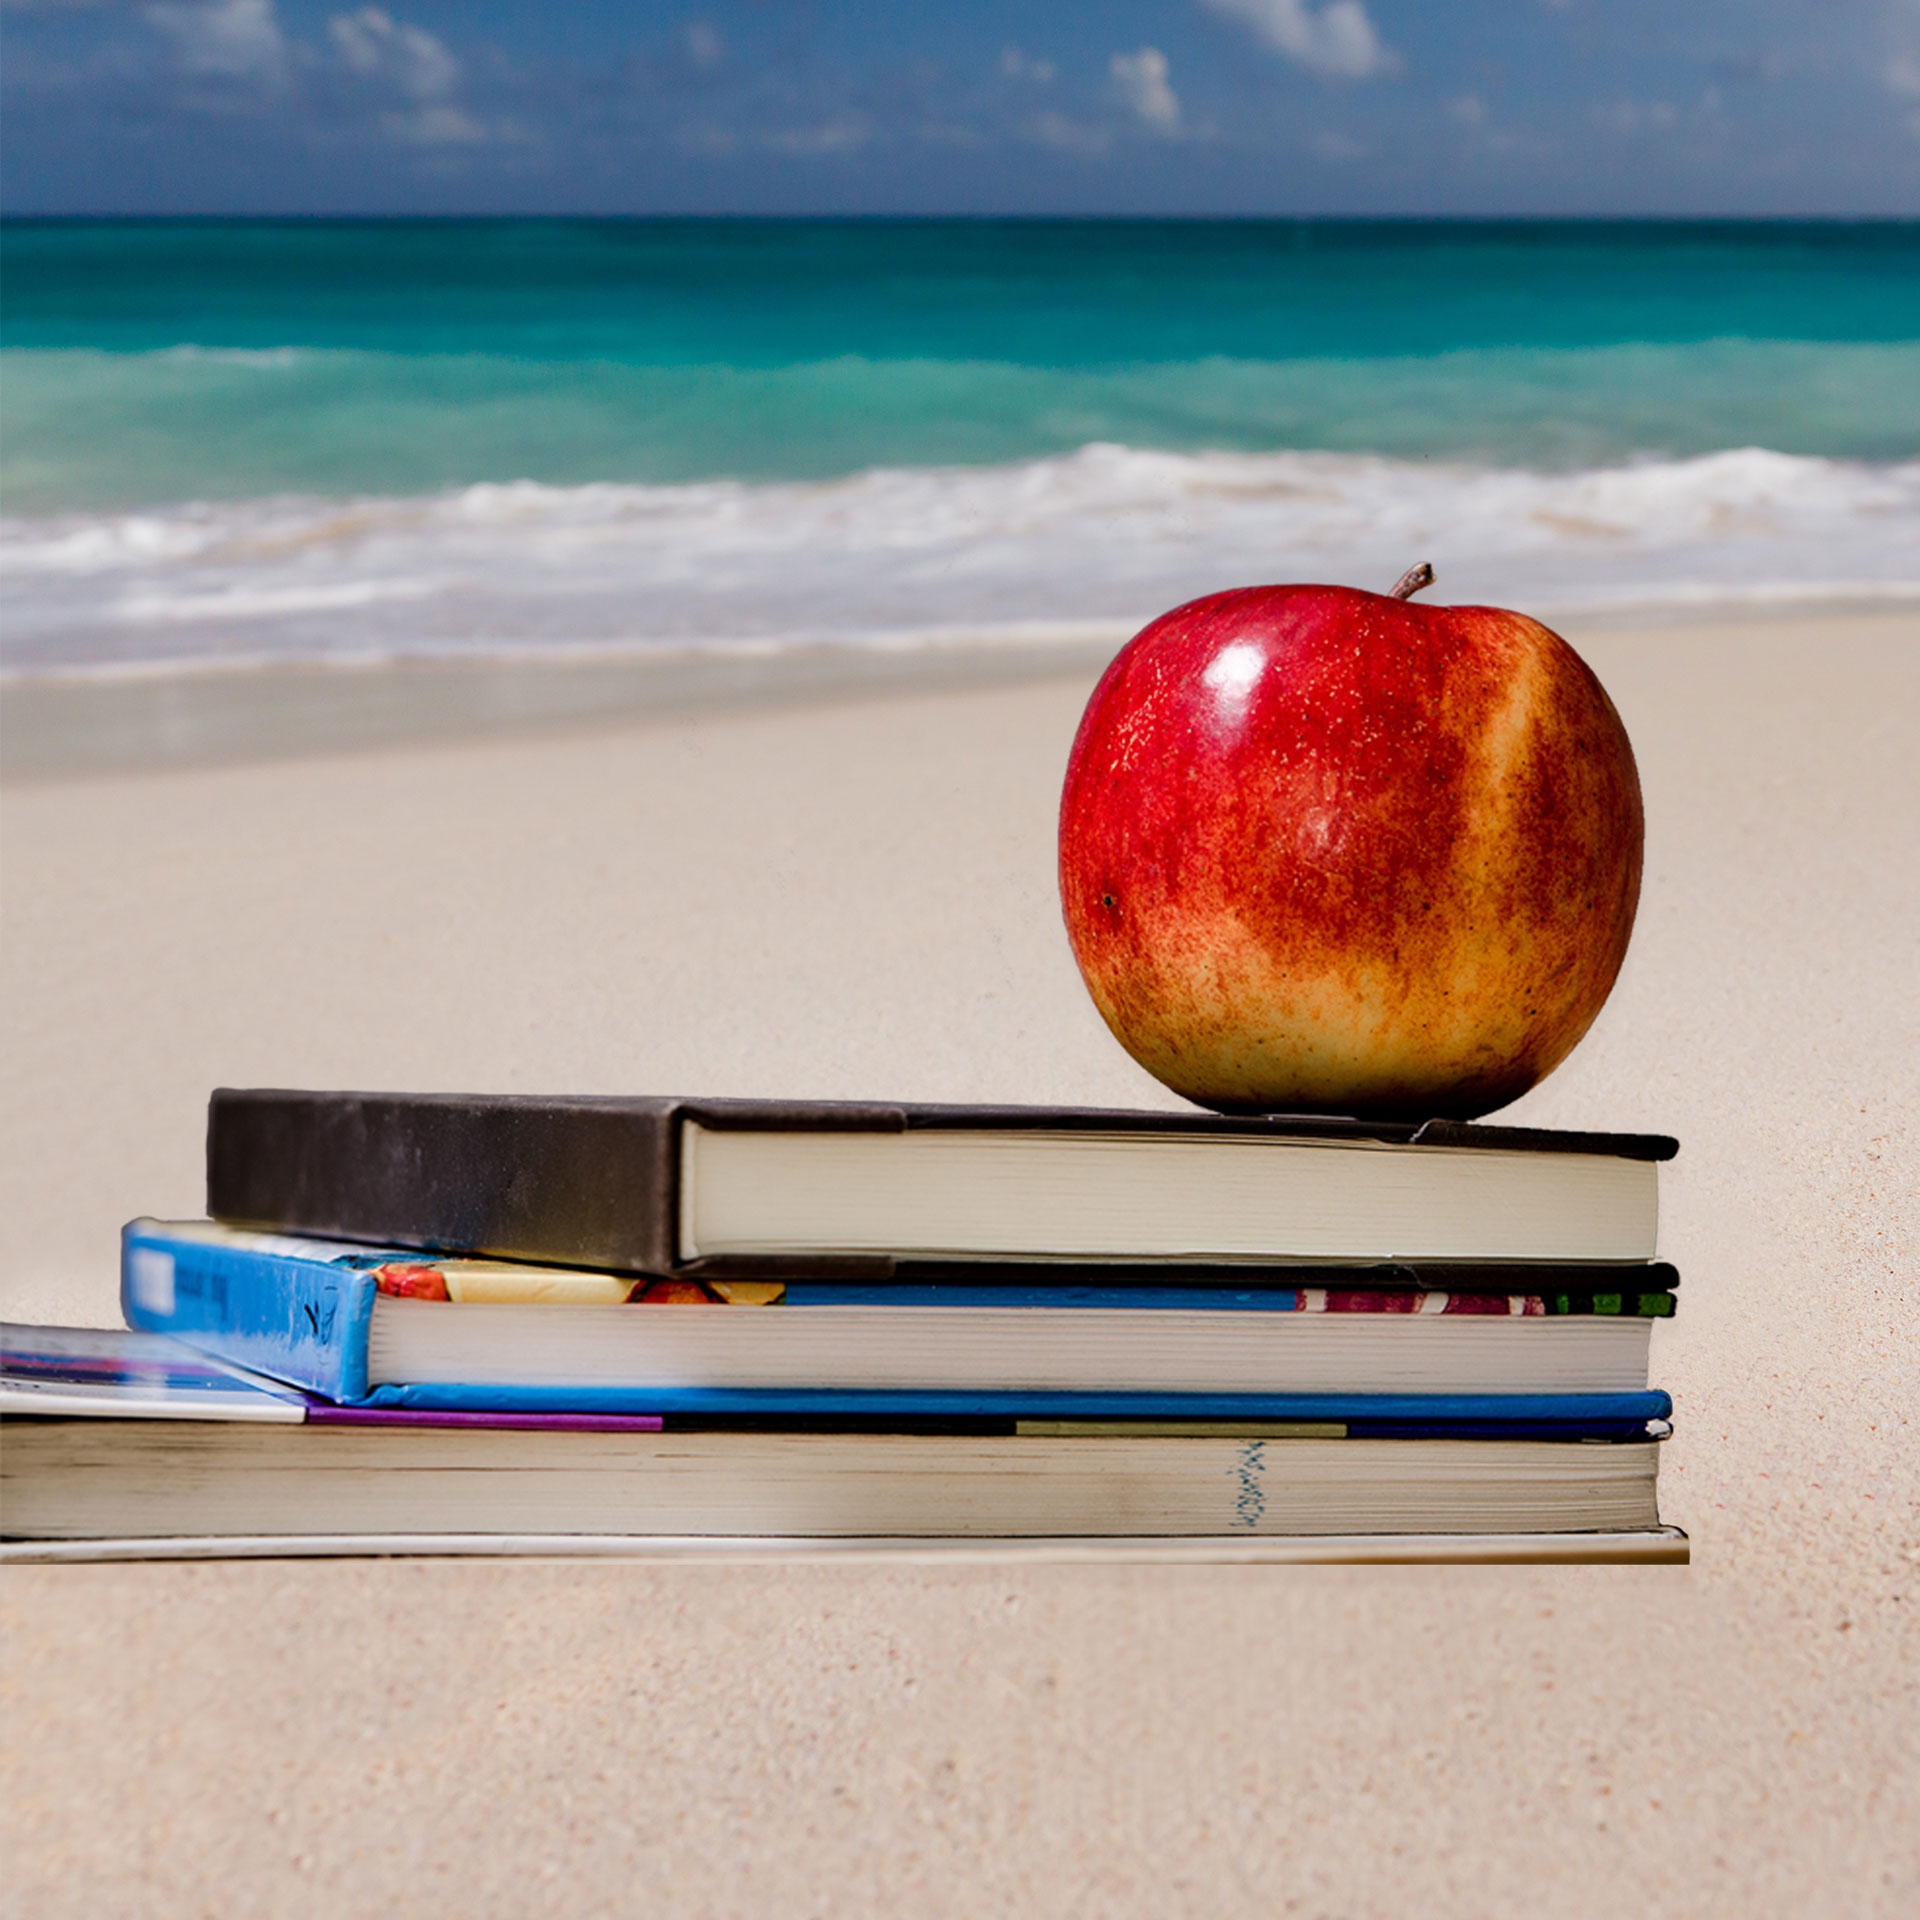 Apple and Books on a Beach